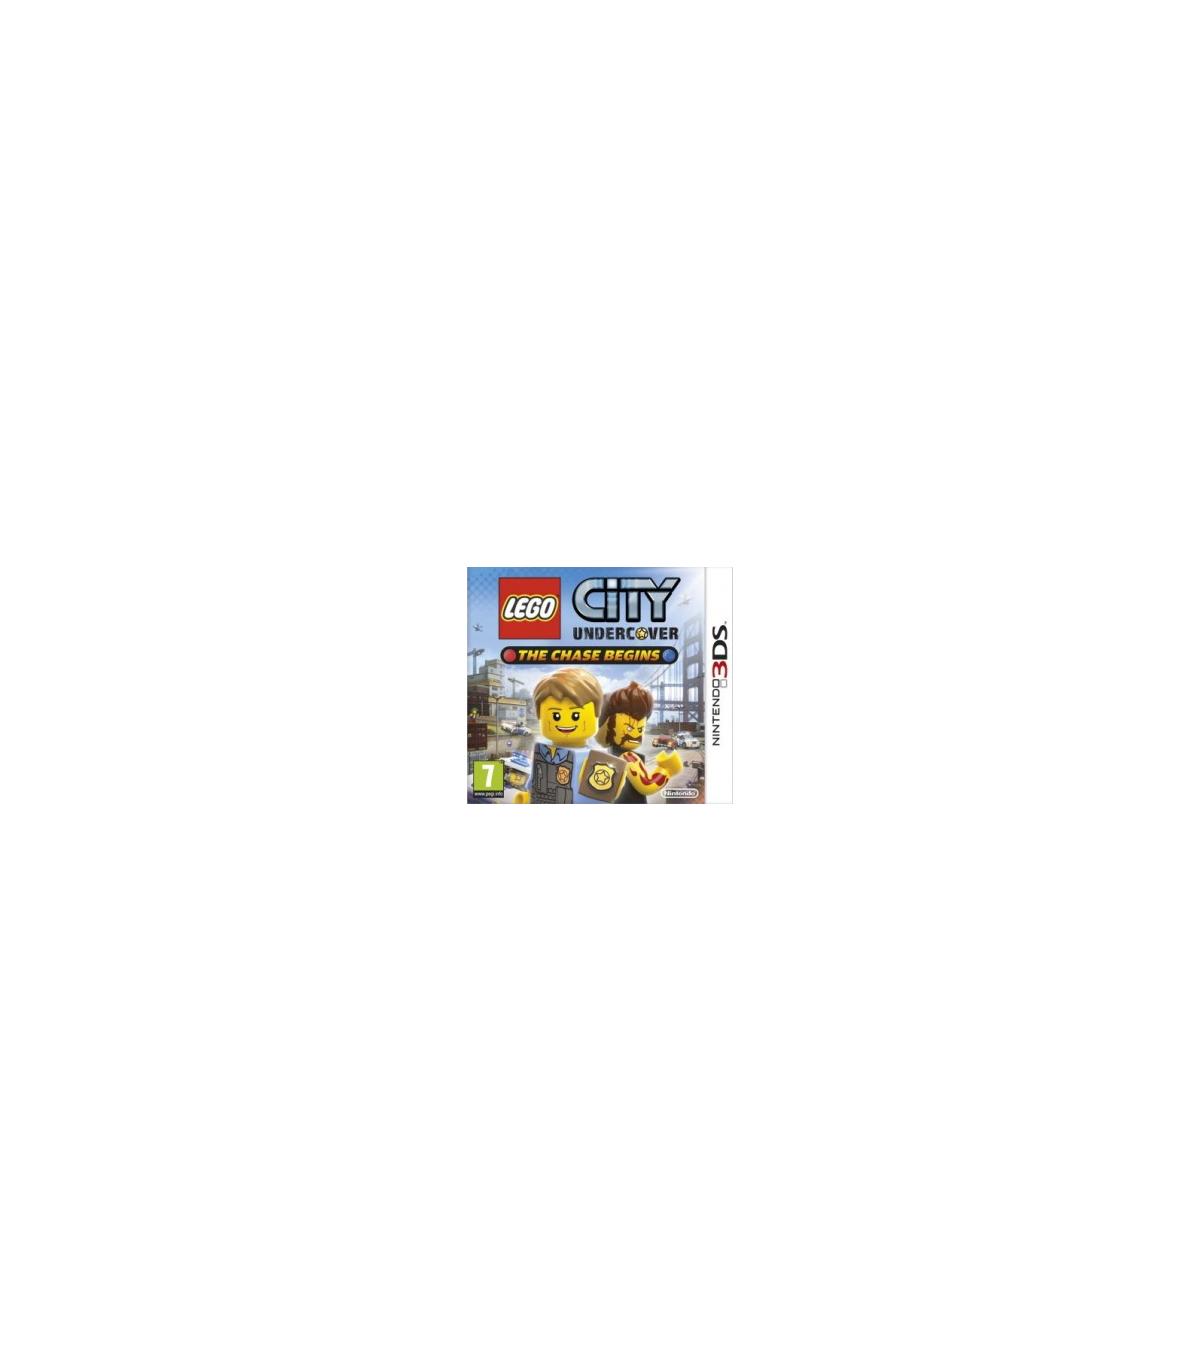 Jeu vidéo Nintendo Selects: LEGO City Undercover : The Chase Begins pour  3DS 